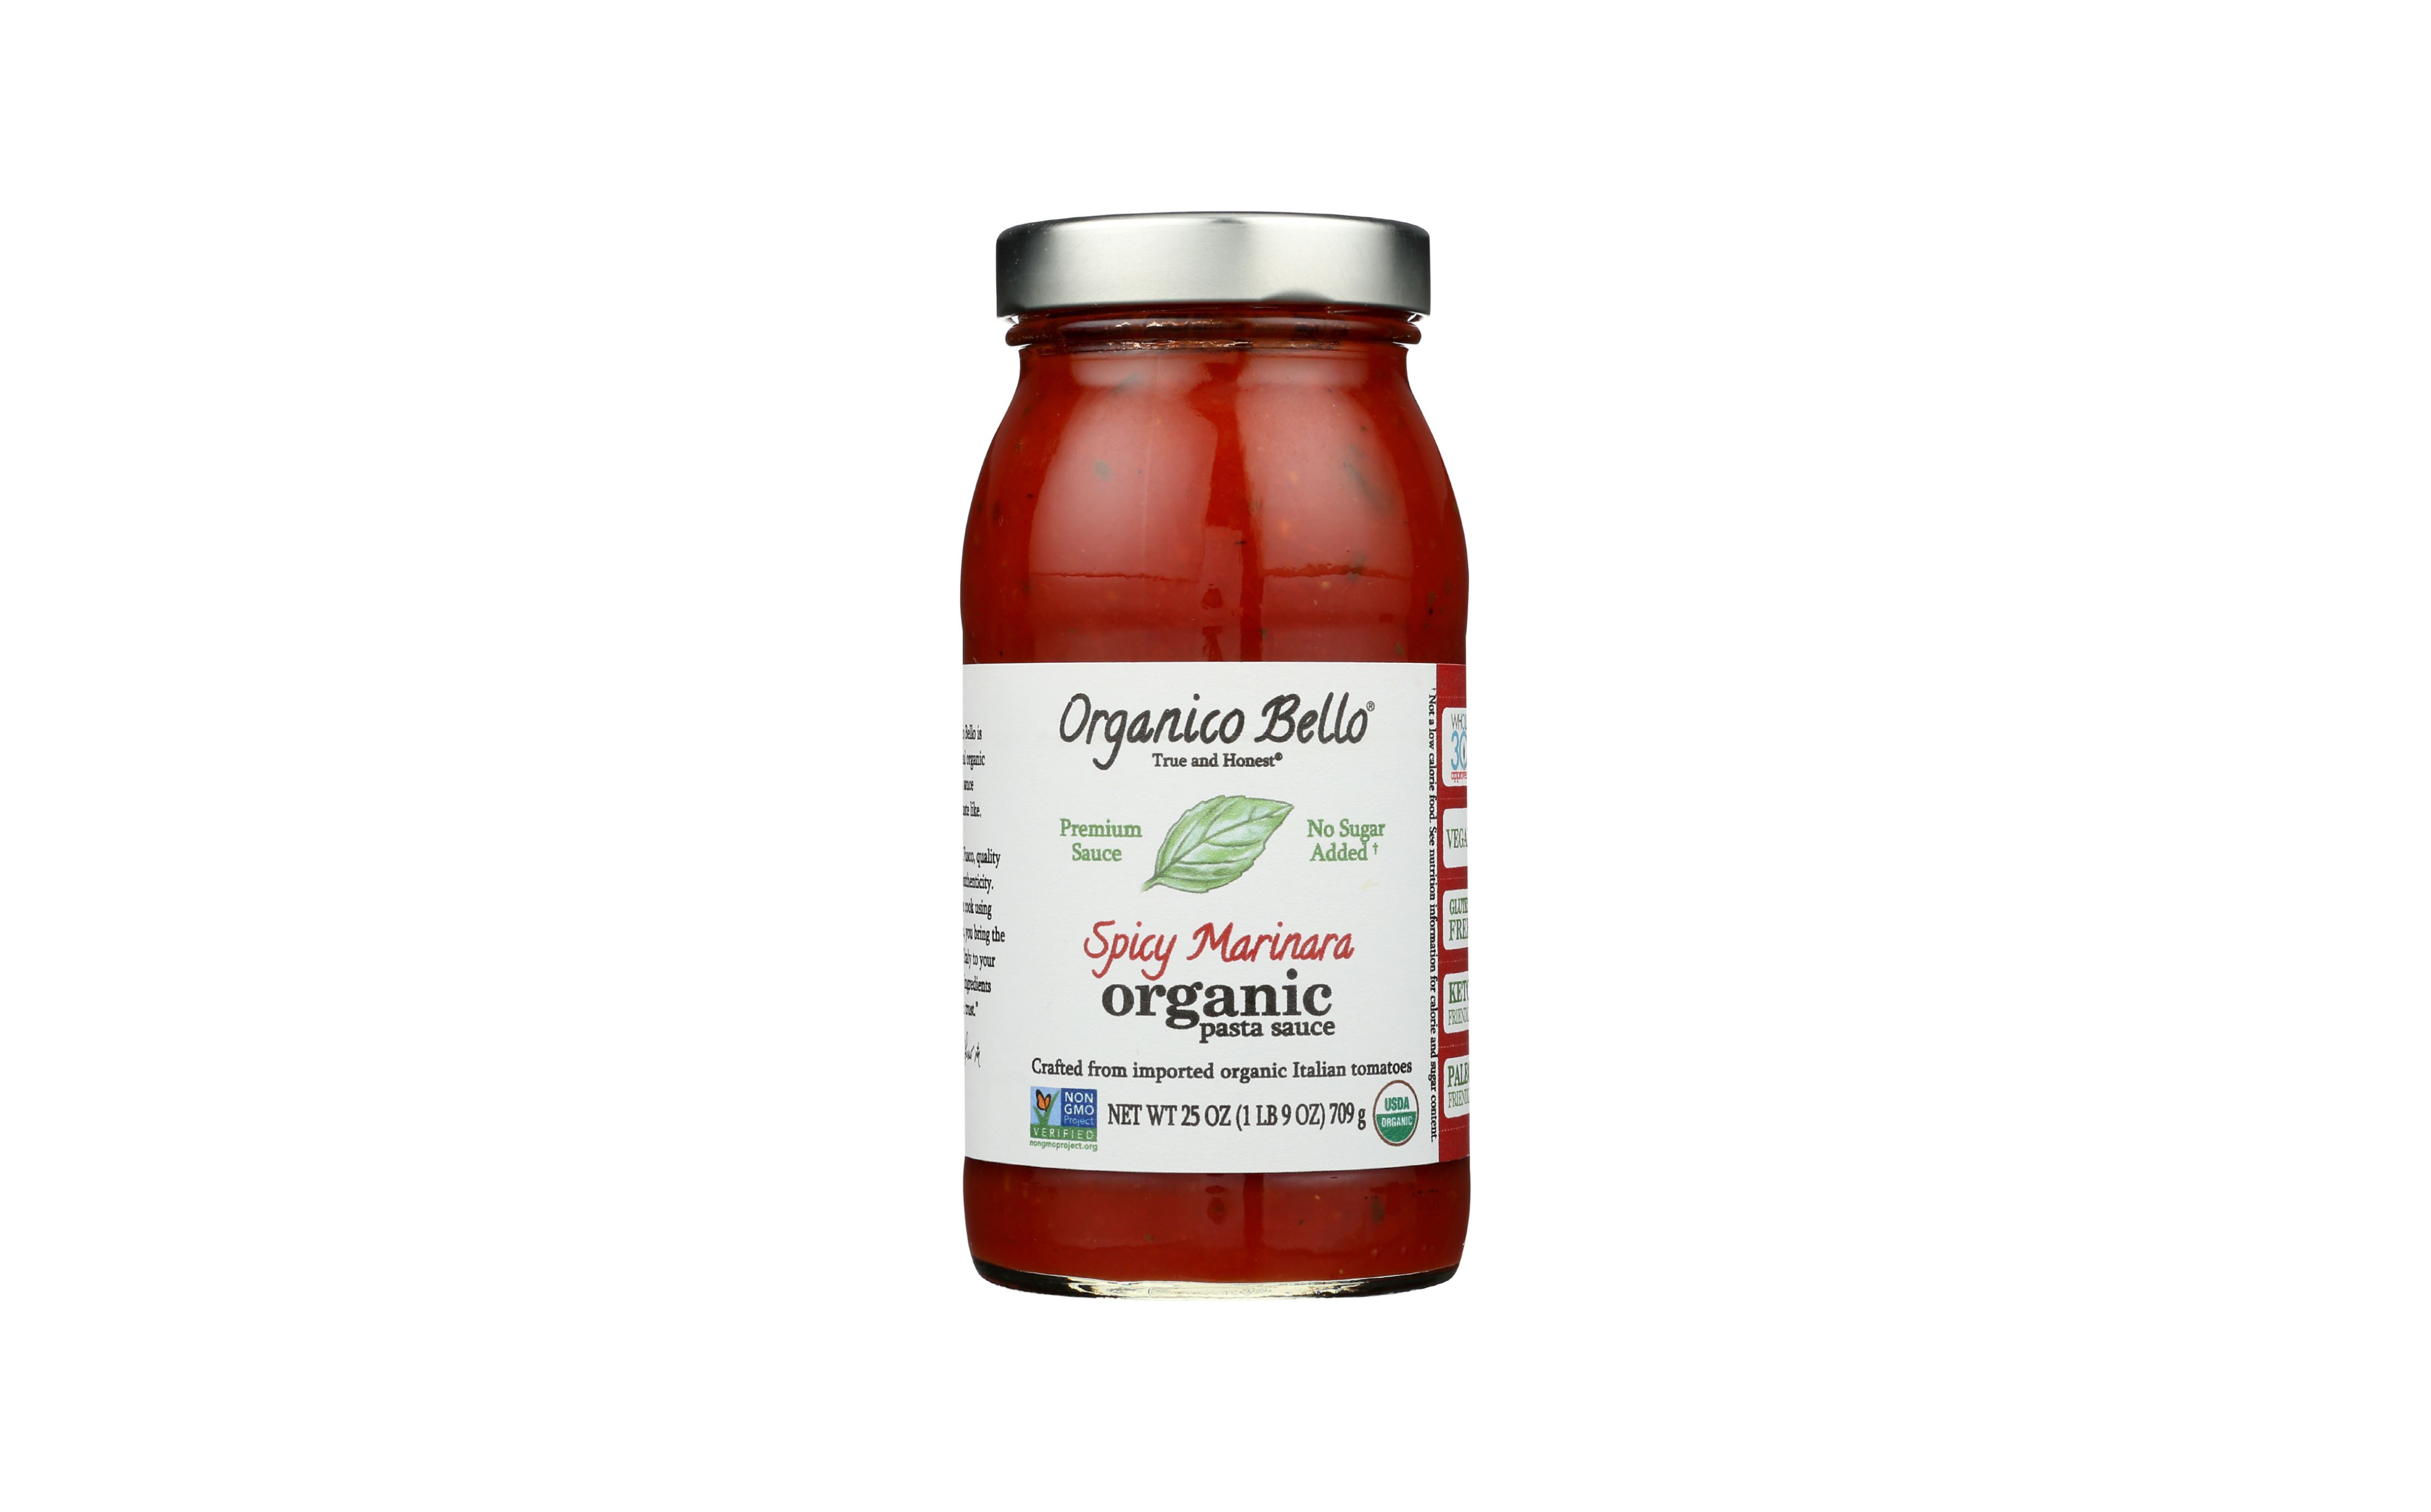 Organico Bello - Org. Spicy Marinara Sauce 25 oz